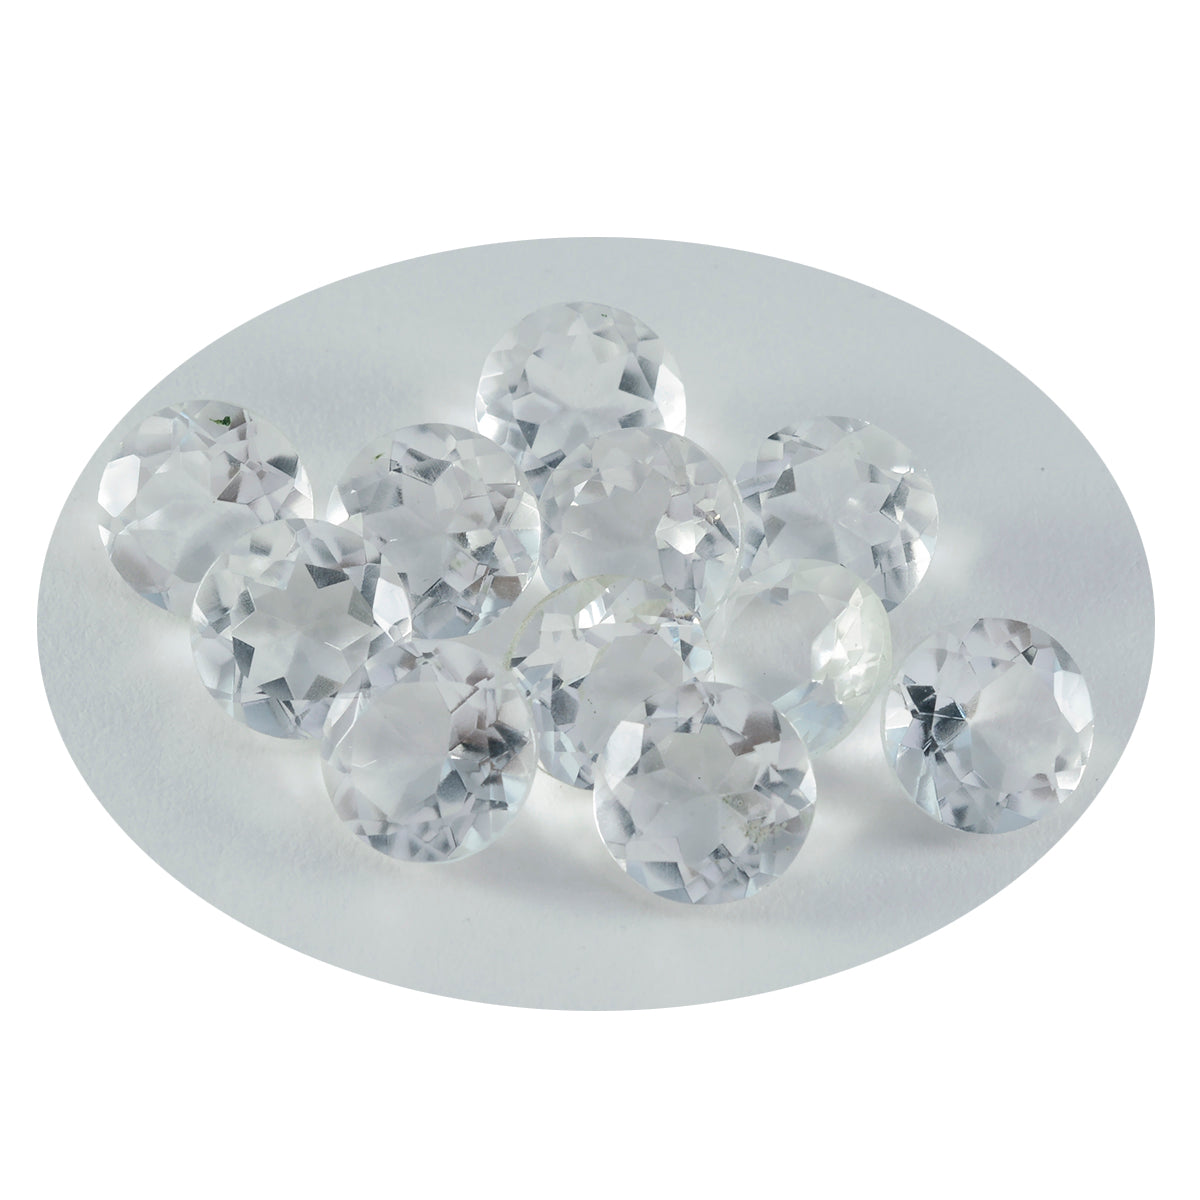 riyogems 1шт белый кристалл кварца ограненный 9x9 мм круглая форма качество AAA россыпь драгоценные камни